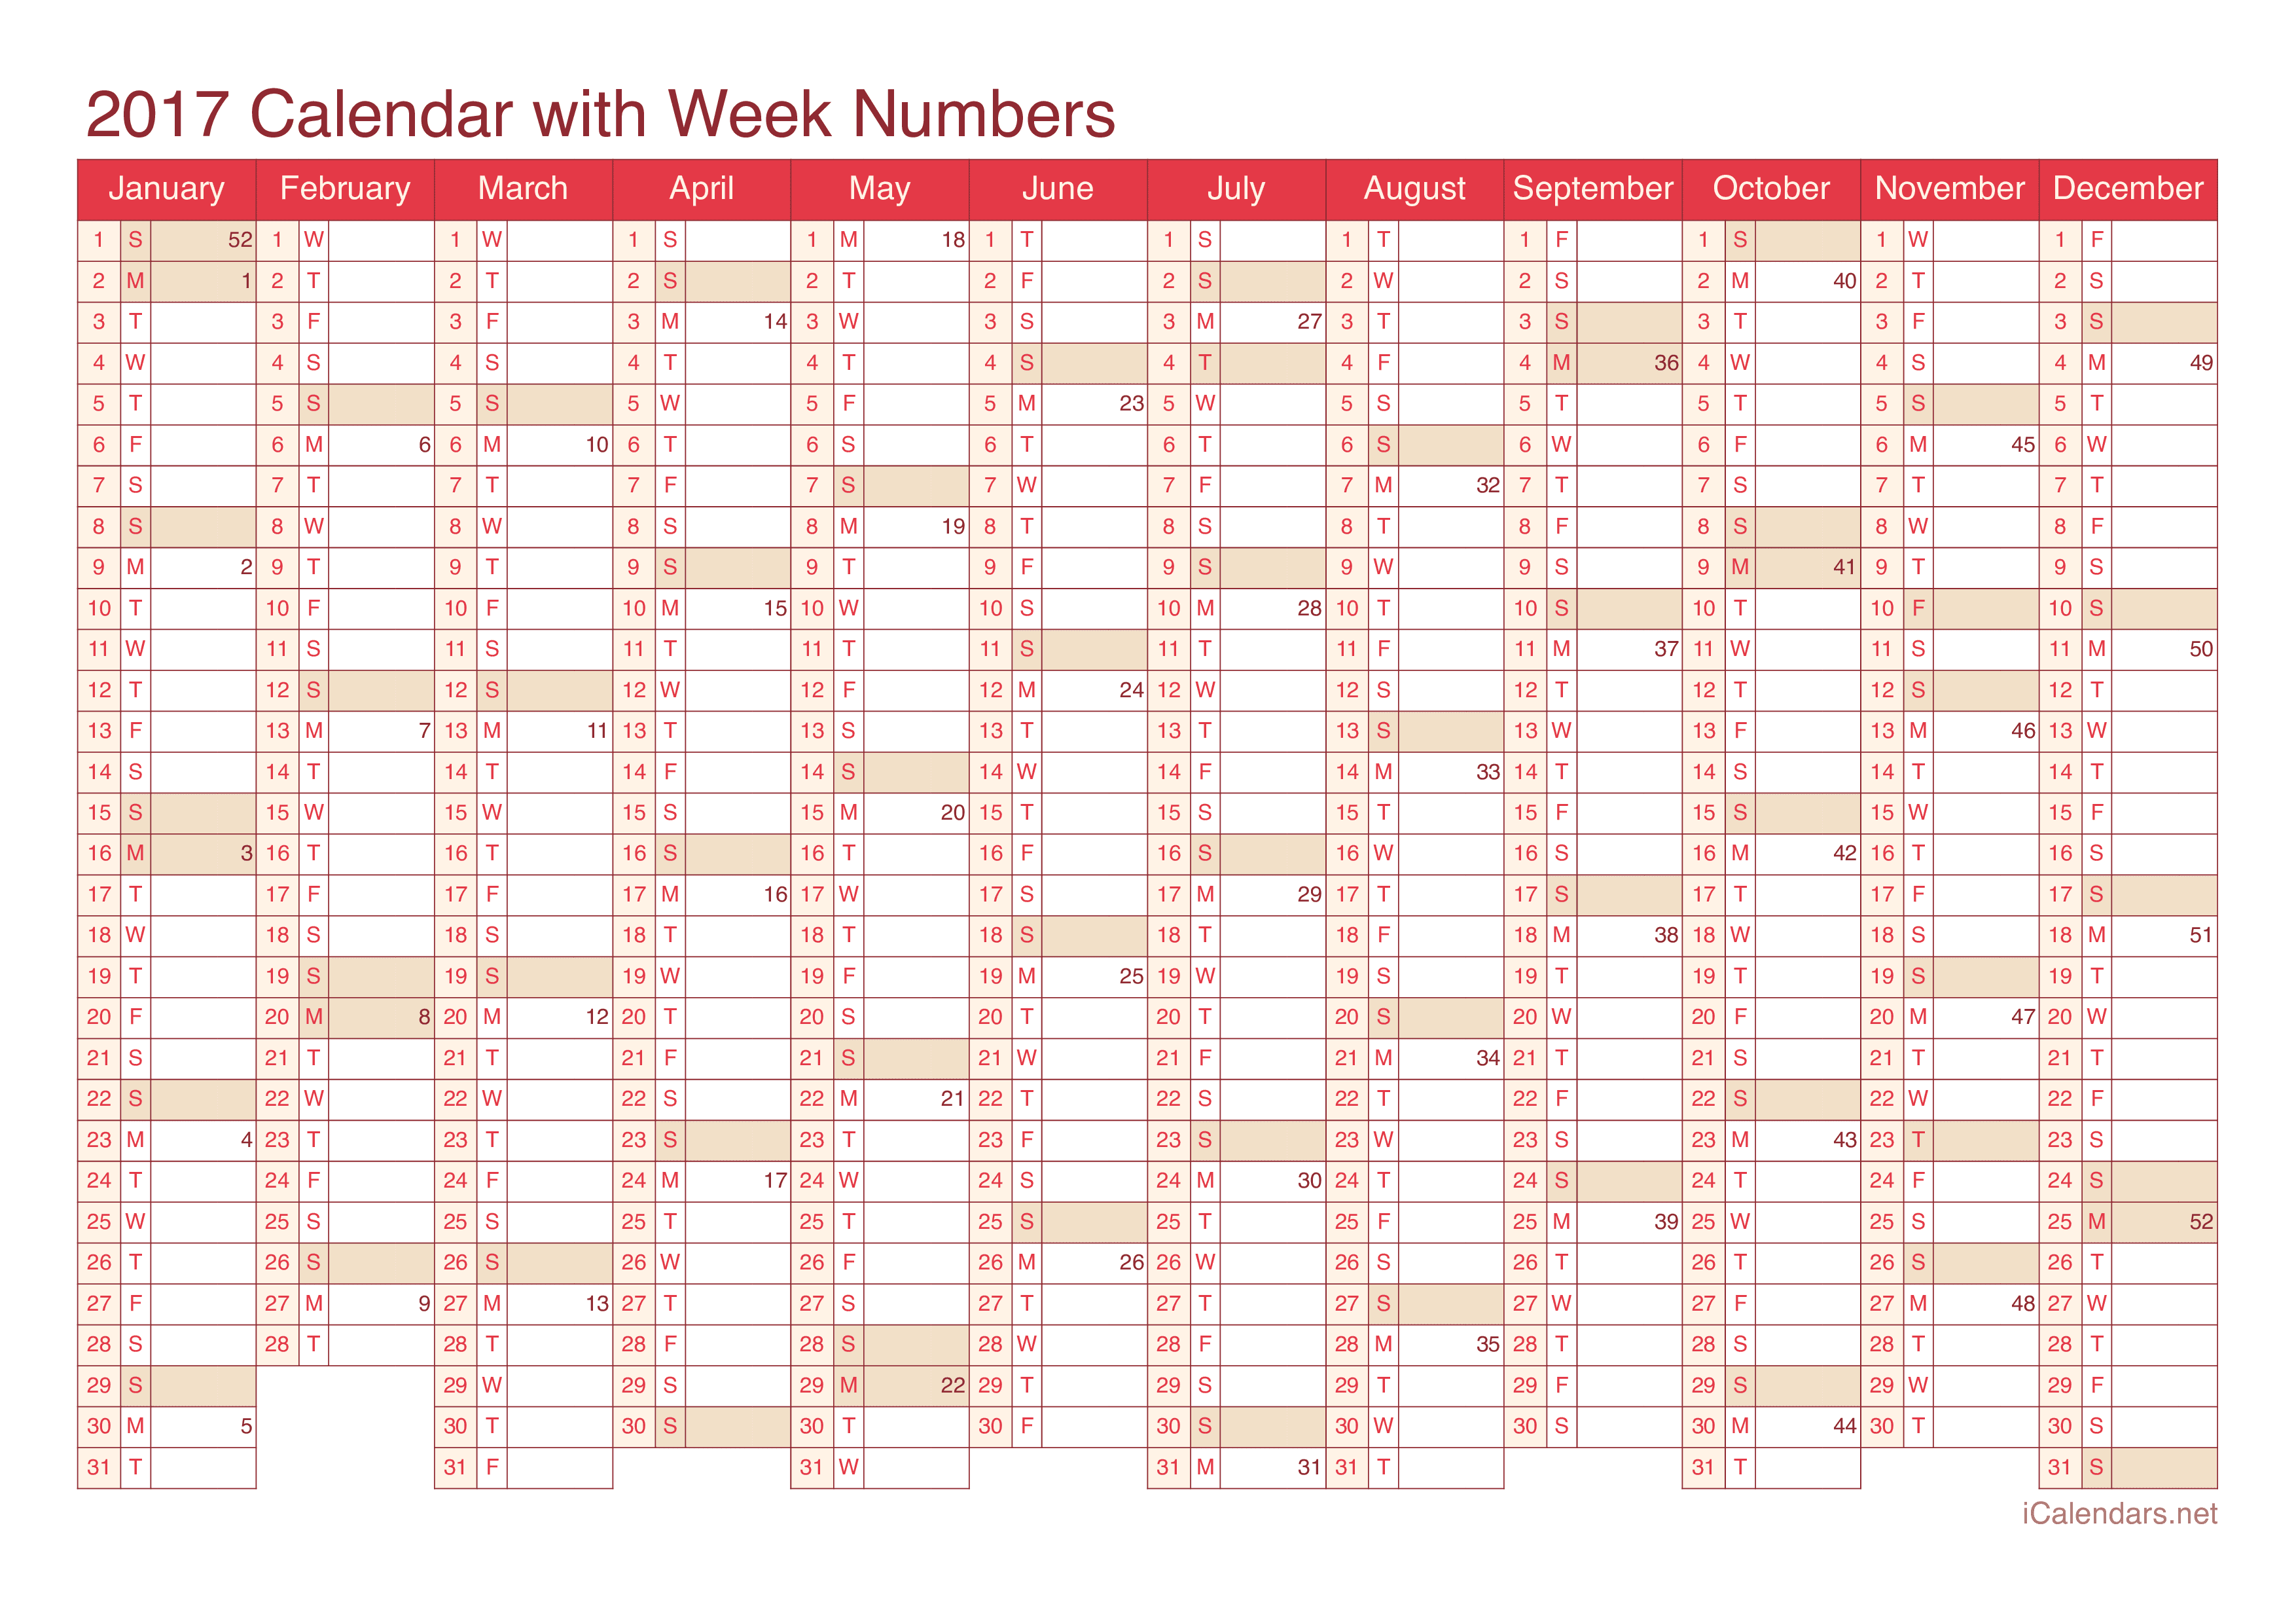 2017 Calendar with week numbers - Cherry